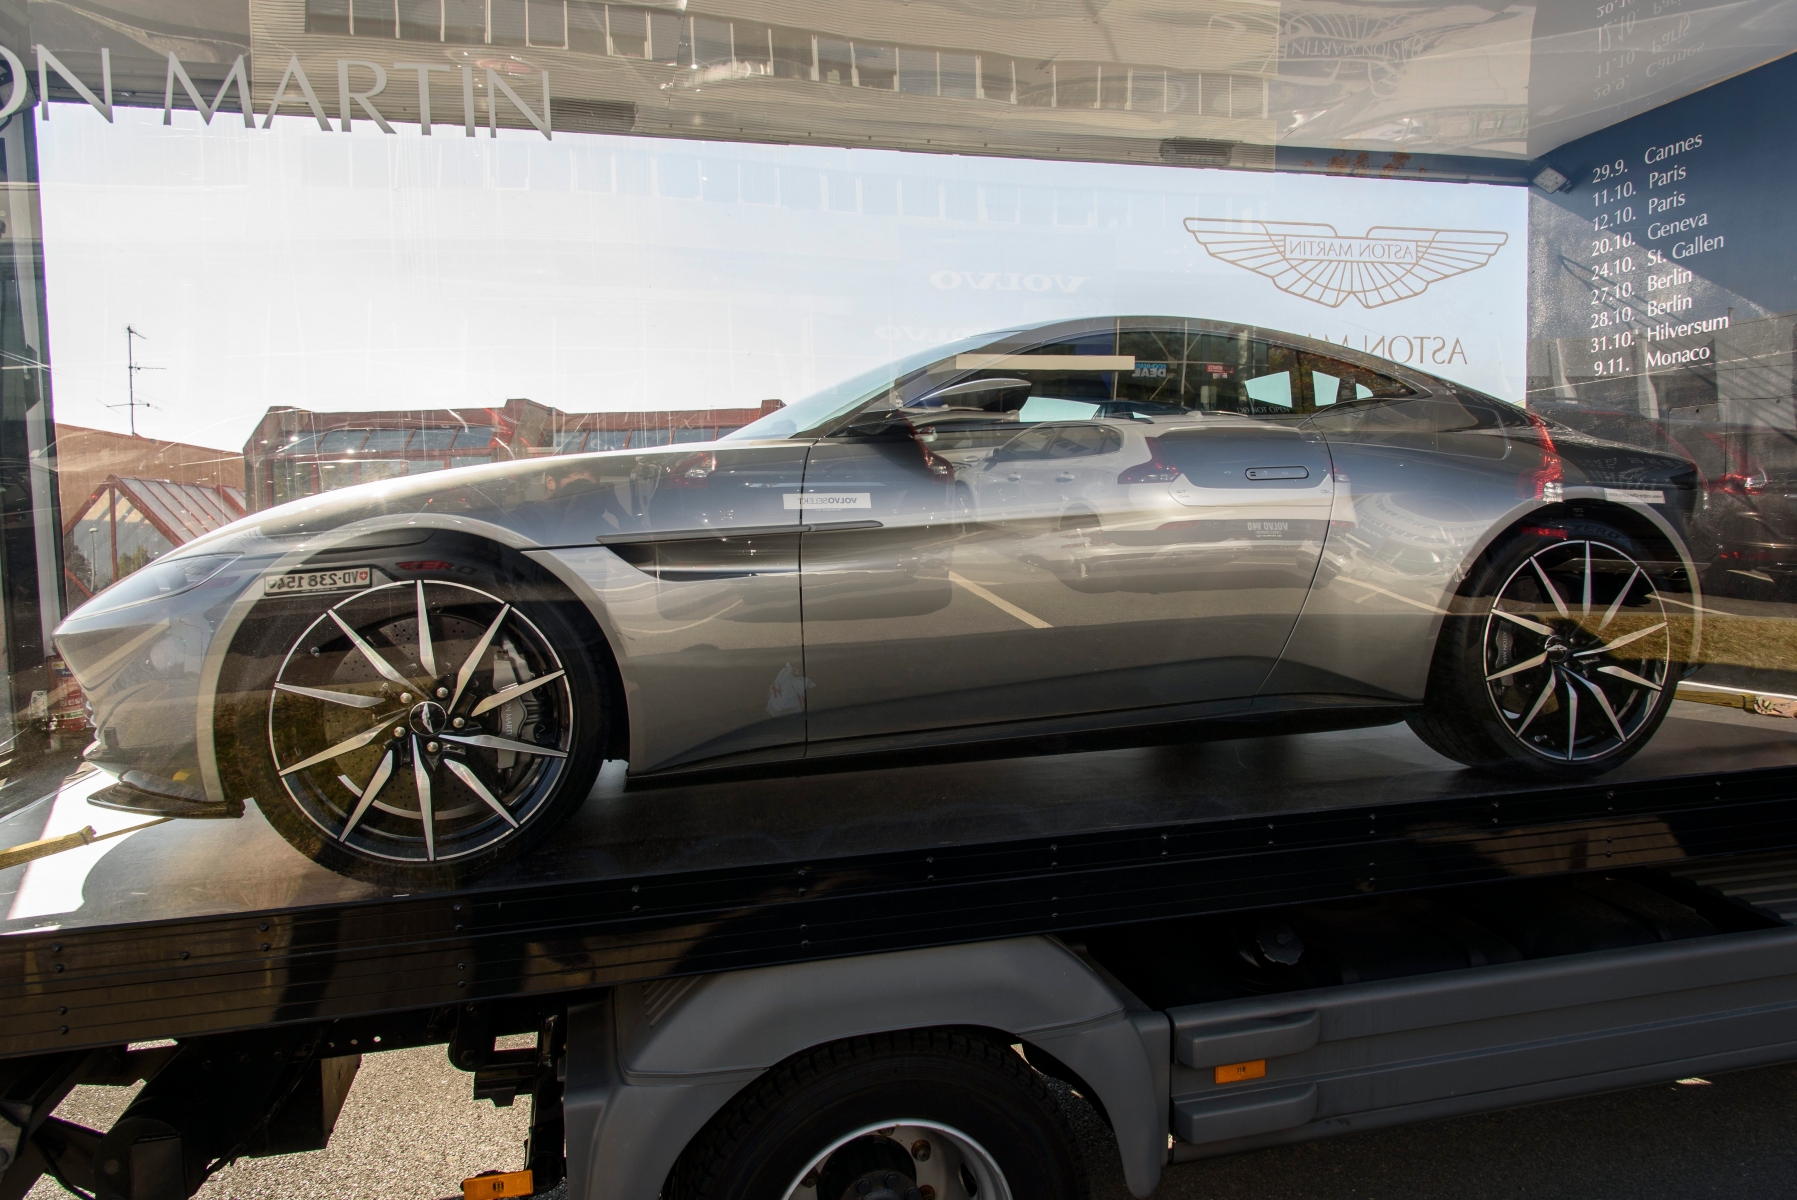 Nyon, mercredi 21.10.2015, photos de l'Aston Martin DB10, utilisÃ©e dans le nouveau James Bond "Spectre", photos CÃ©dric Sandoz